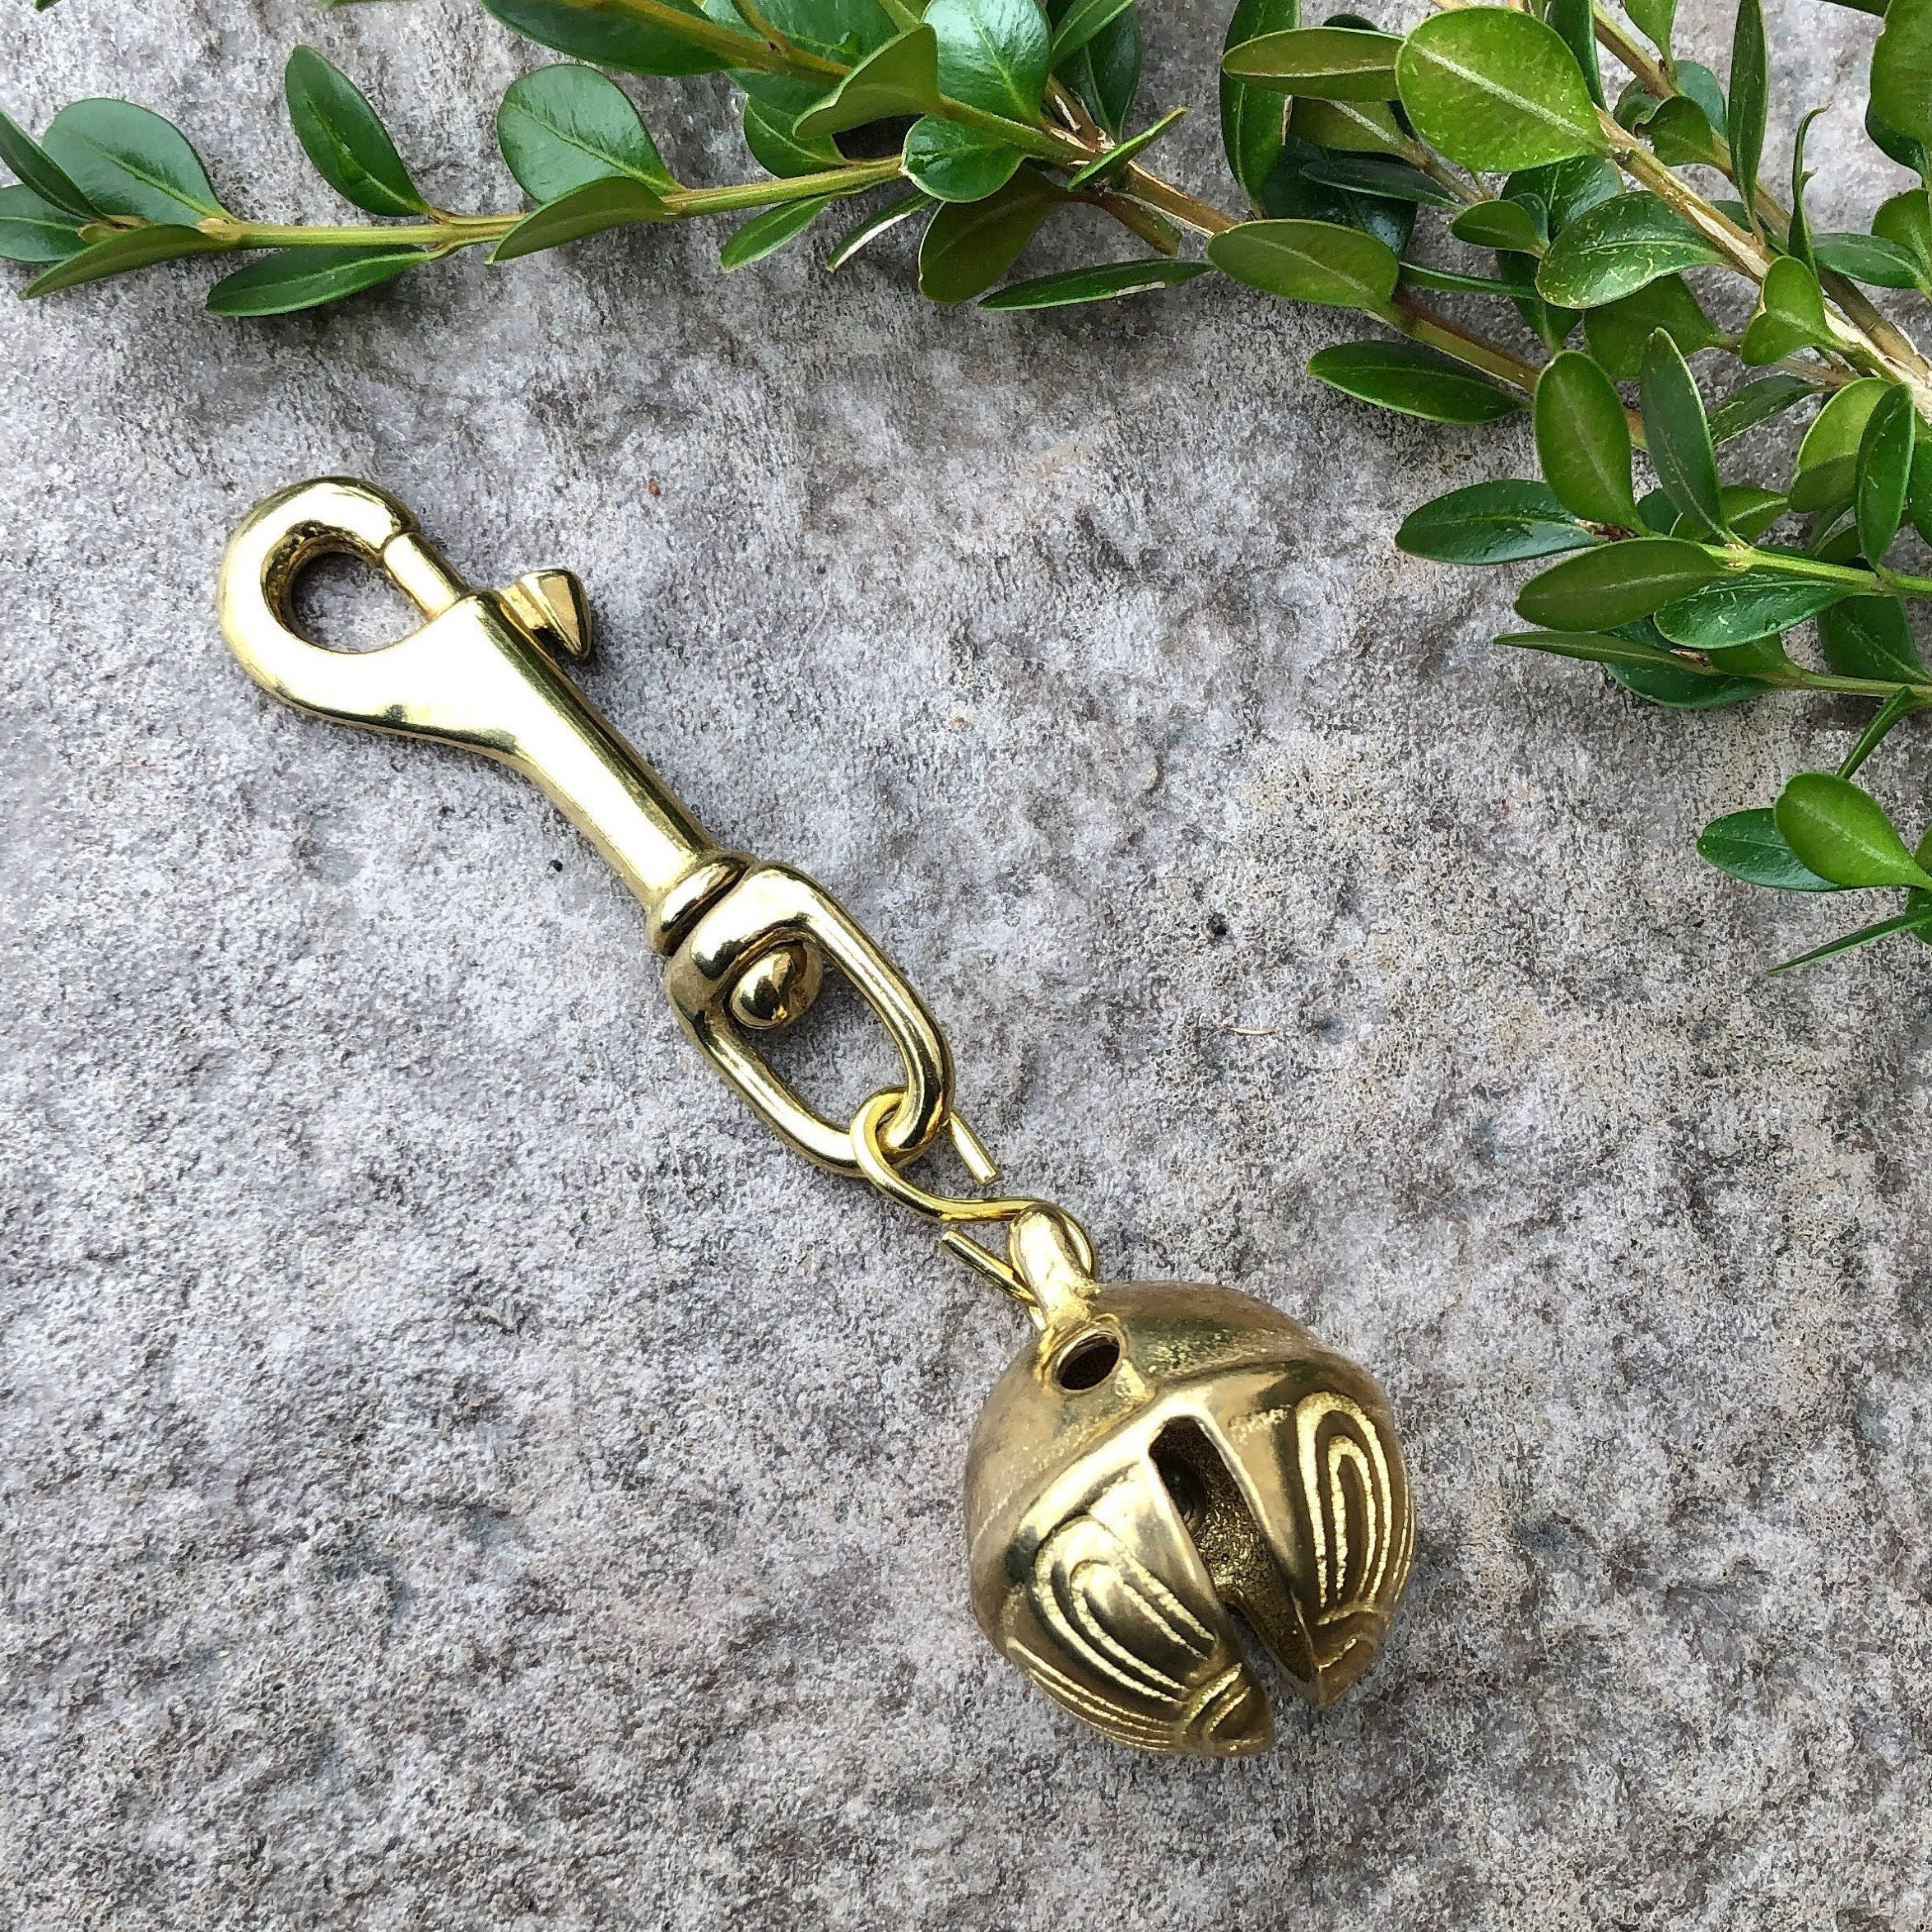  TEHAUX bell pendant metal key ring bracelet key ring mini  backpack keychain antique decorative bell key ring backpack pendants mini  fortune lucky bells charm small ornament key pendants : Arts, Crafts